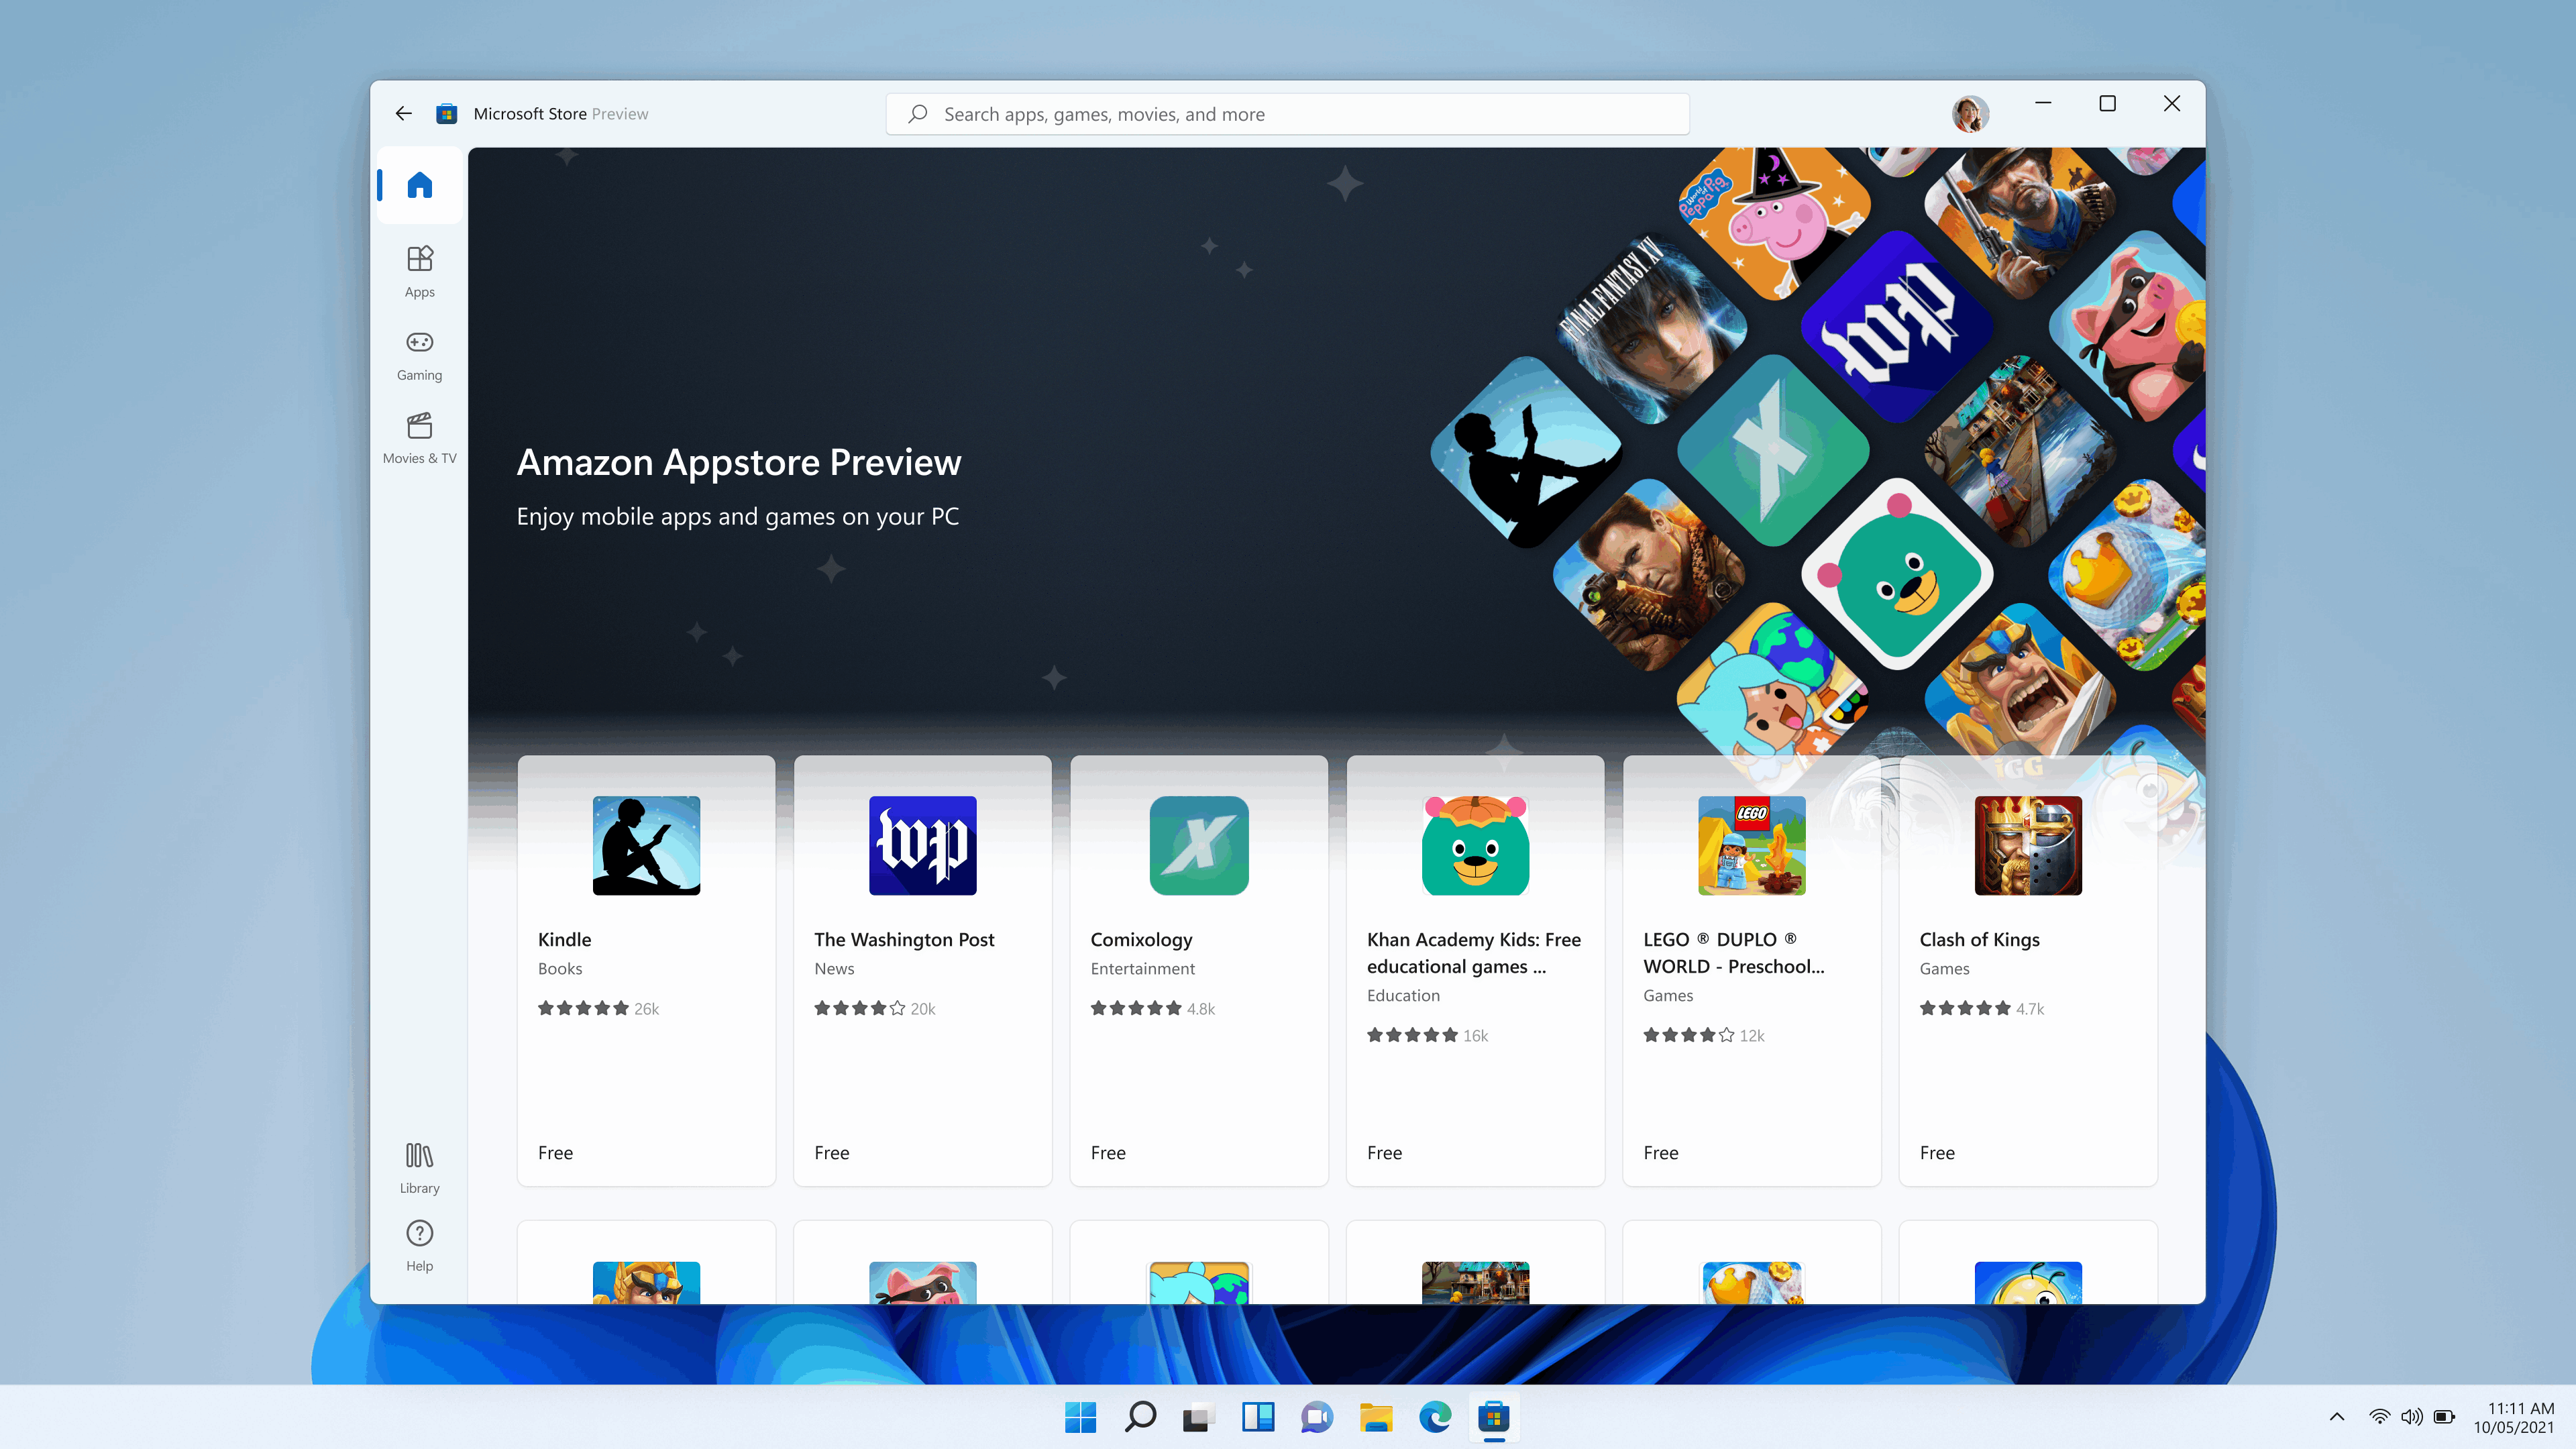 google play download pc windows 10